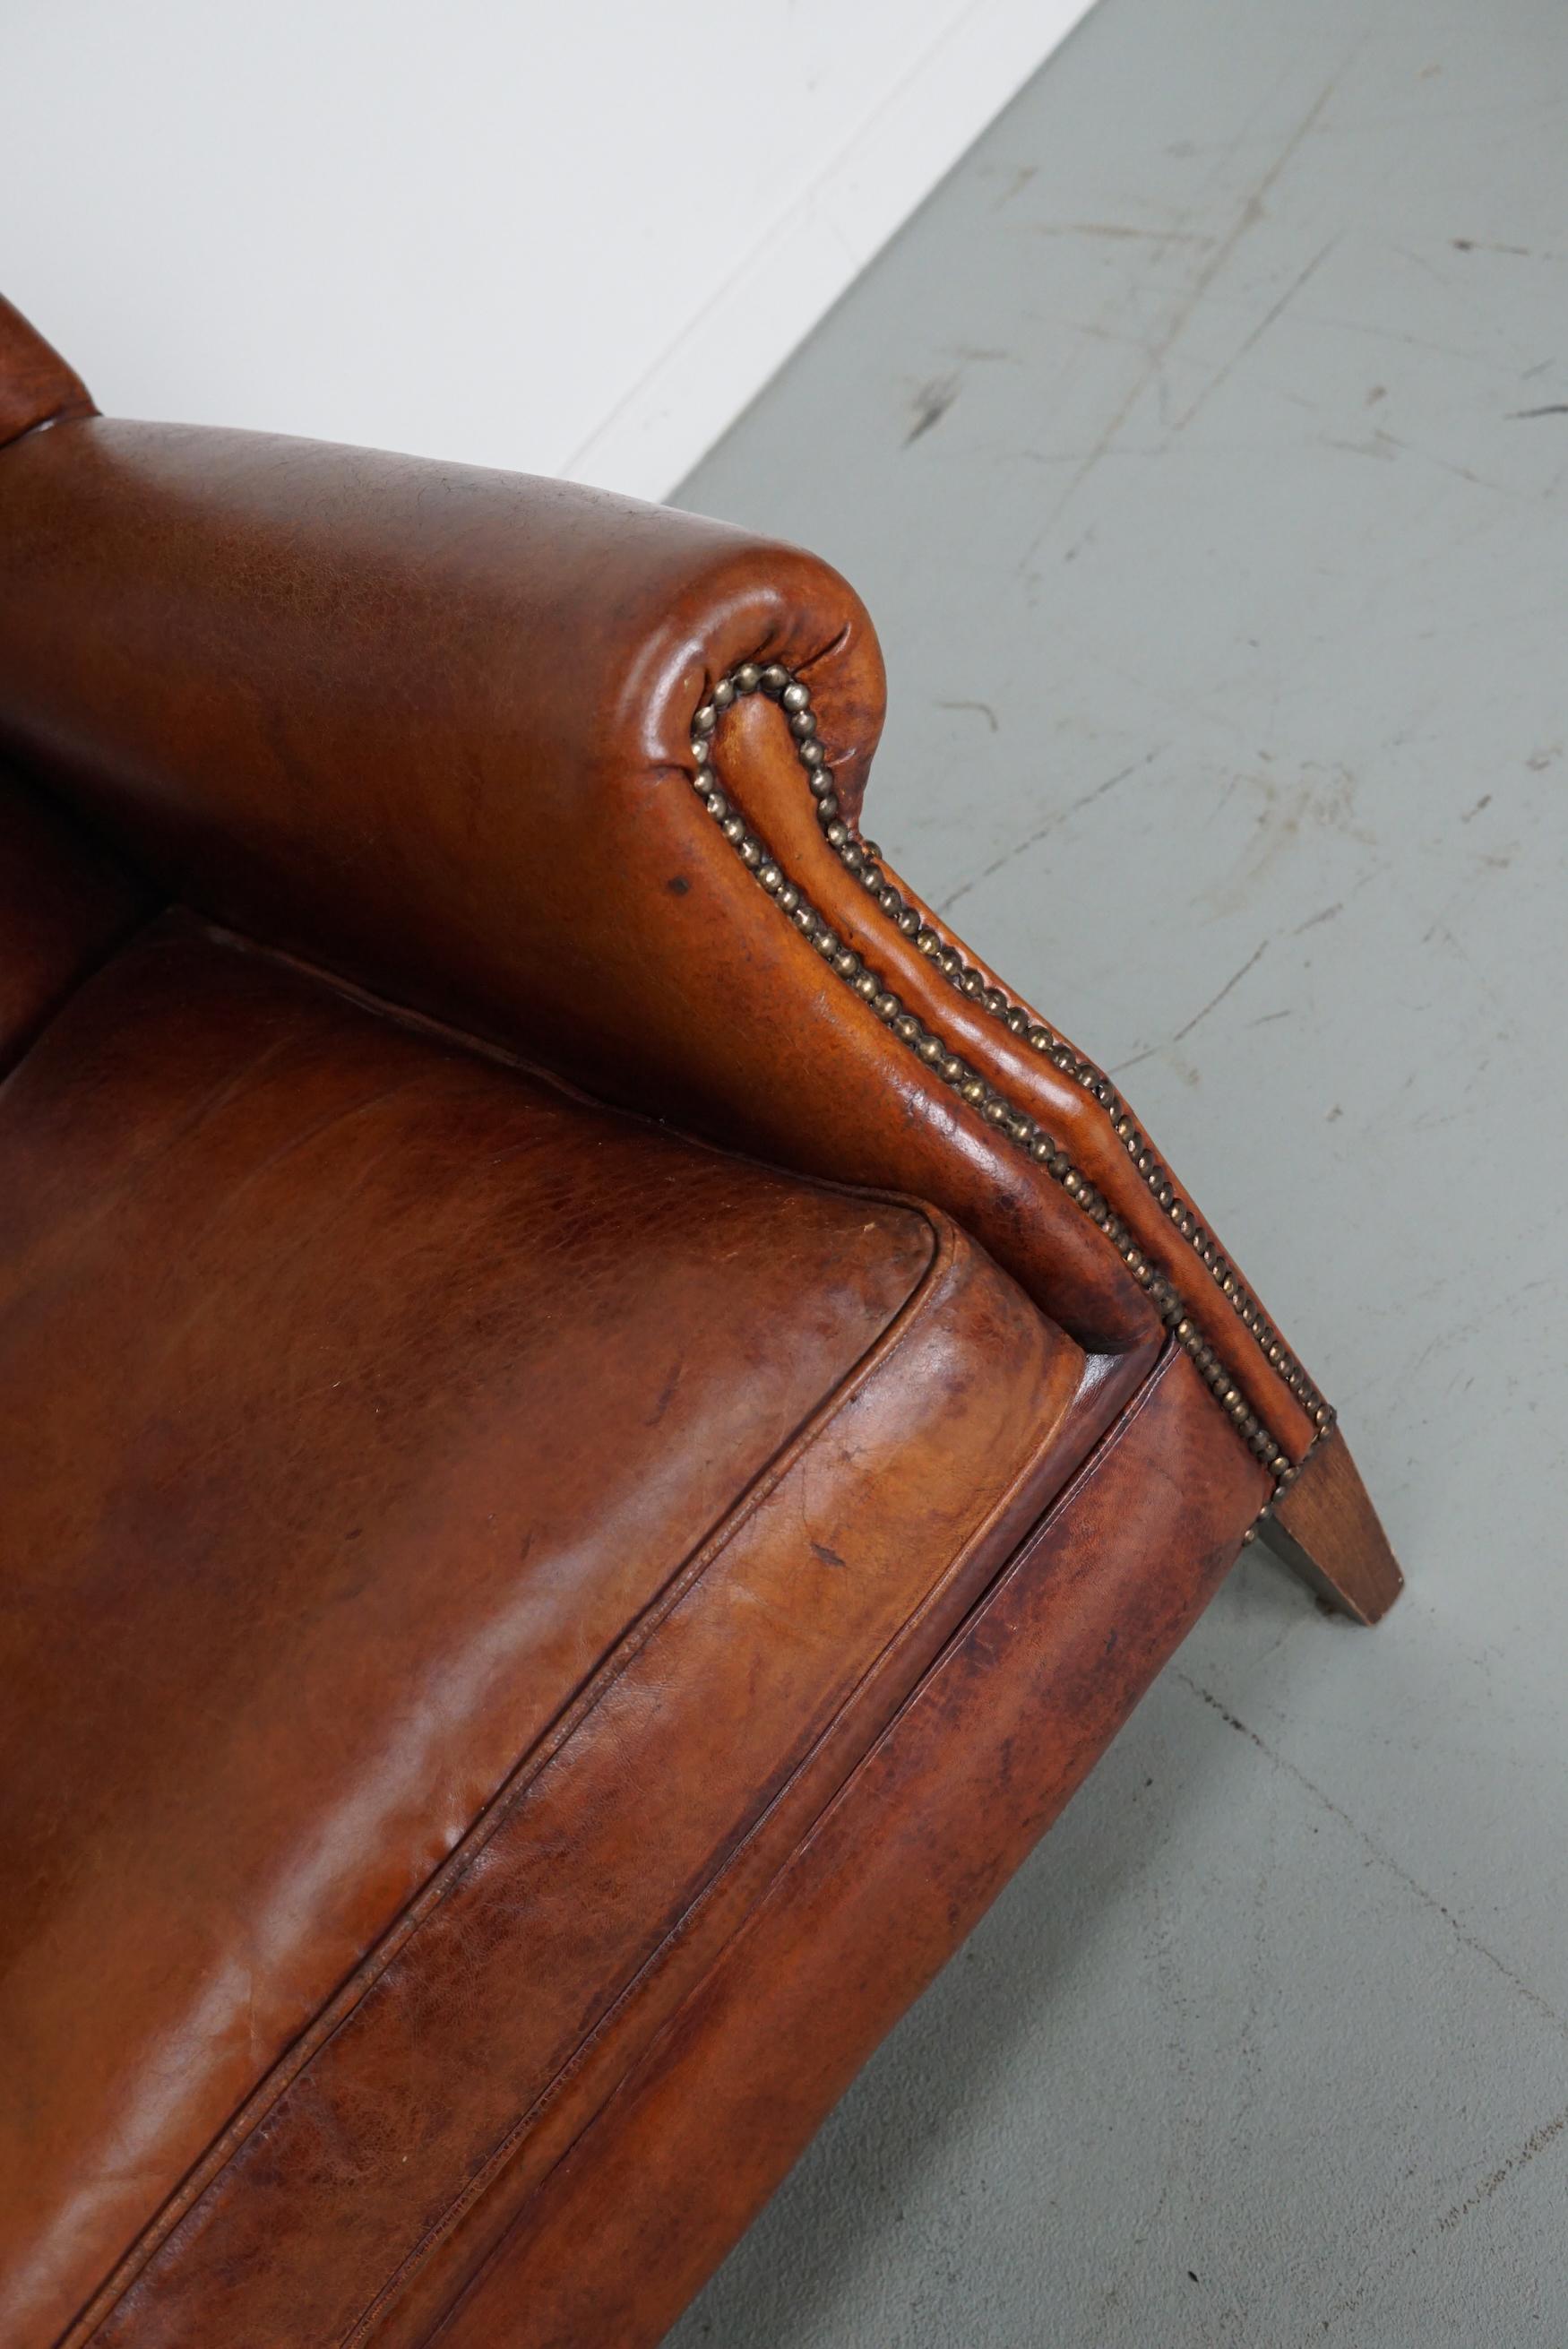 Industrial Vintage Dutch Cognac Colored Leather Club Chair